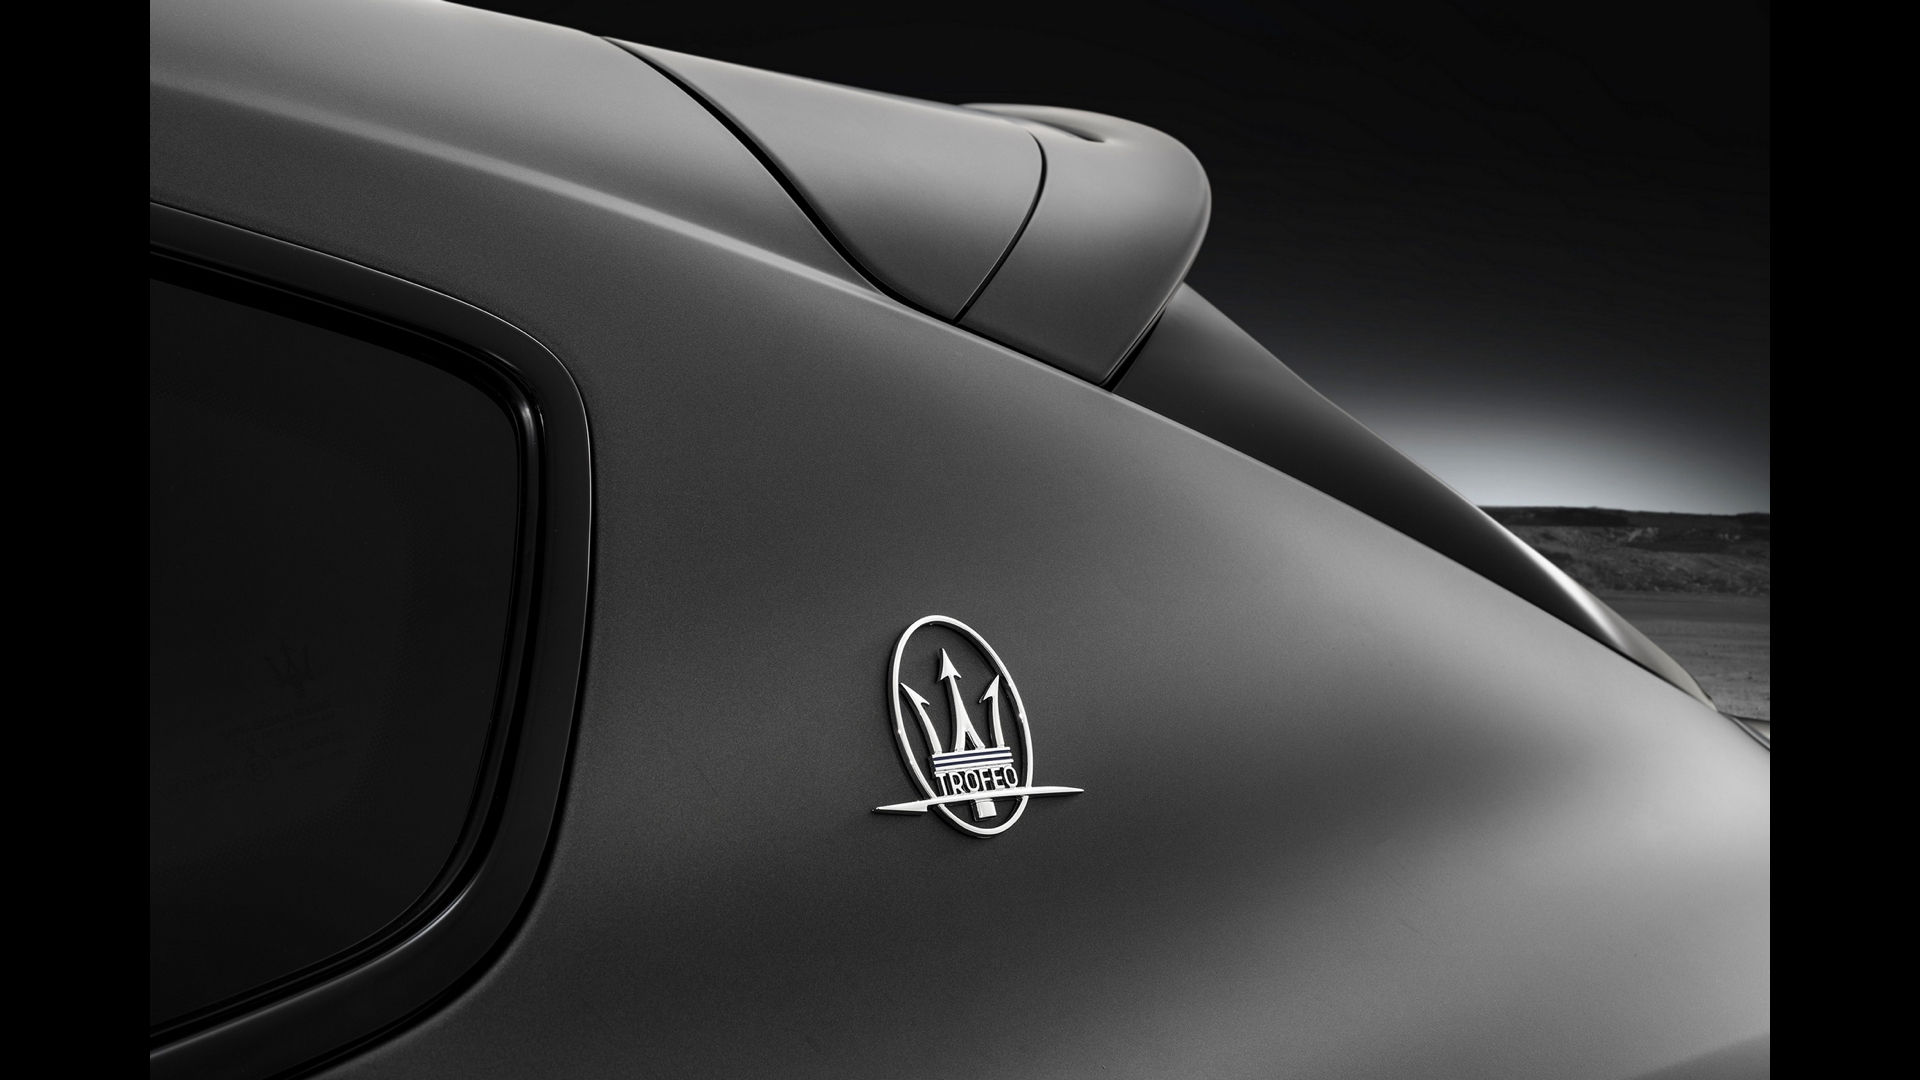 Focusing on the exclusive Logo of Maserati Levante Trofeo SUV